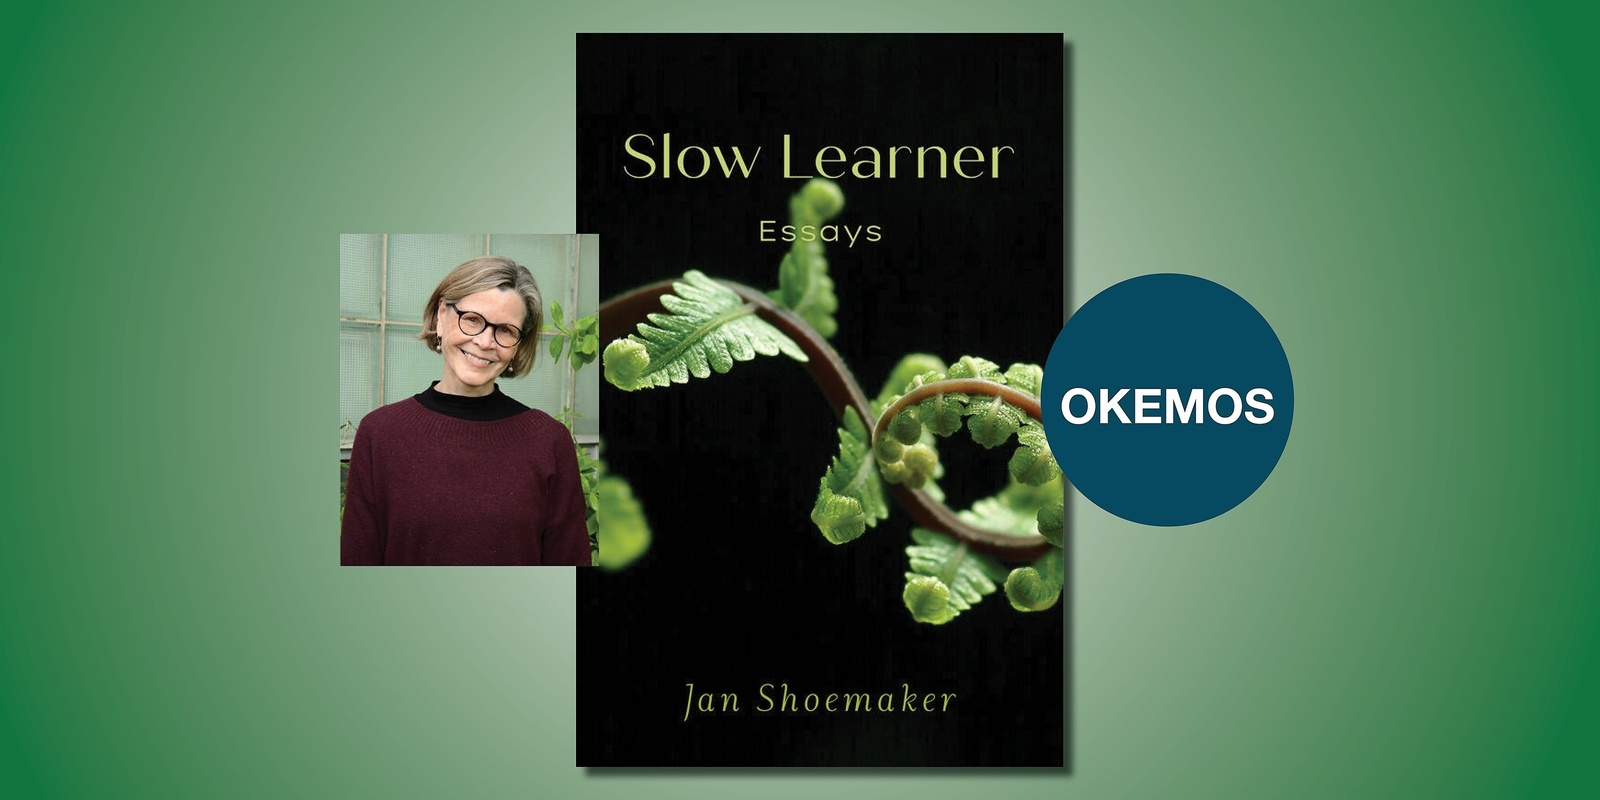 Banner image for Slow Learner: Essays with Jan Shoemaker